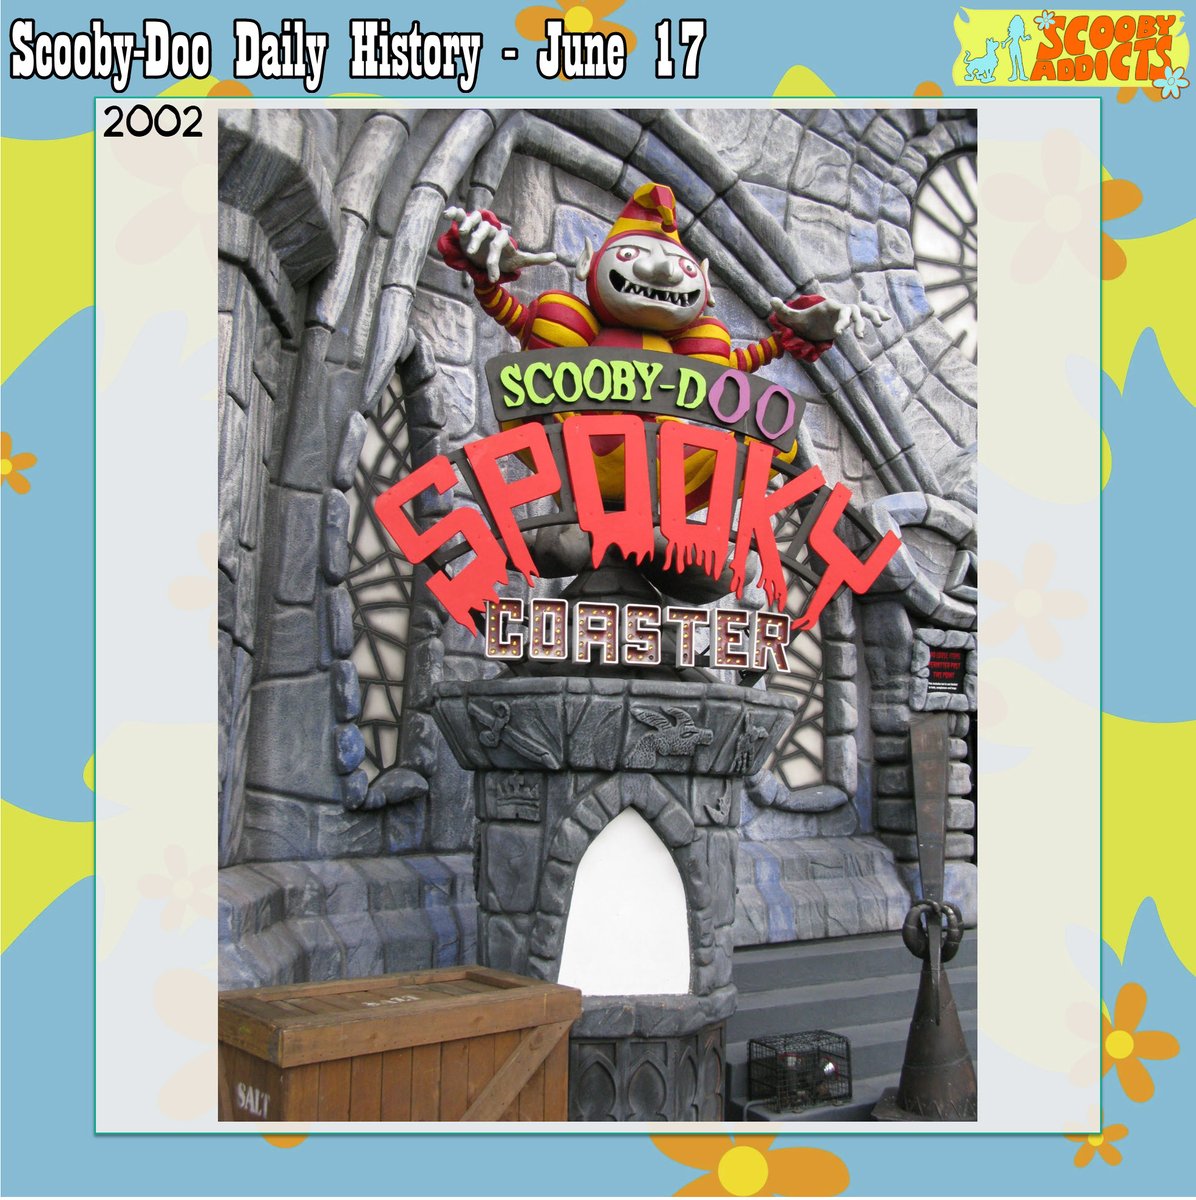 June 17 - #scoobydoohistory 

2002 - Scooby-Doo Spooky Coaster Ride Opened in Australia

#ScoobyDoo

scoobyaddicts.com